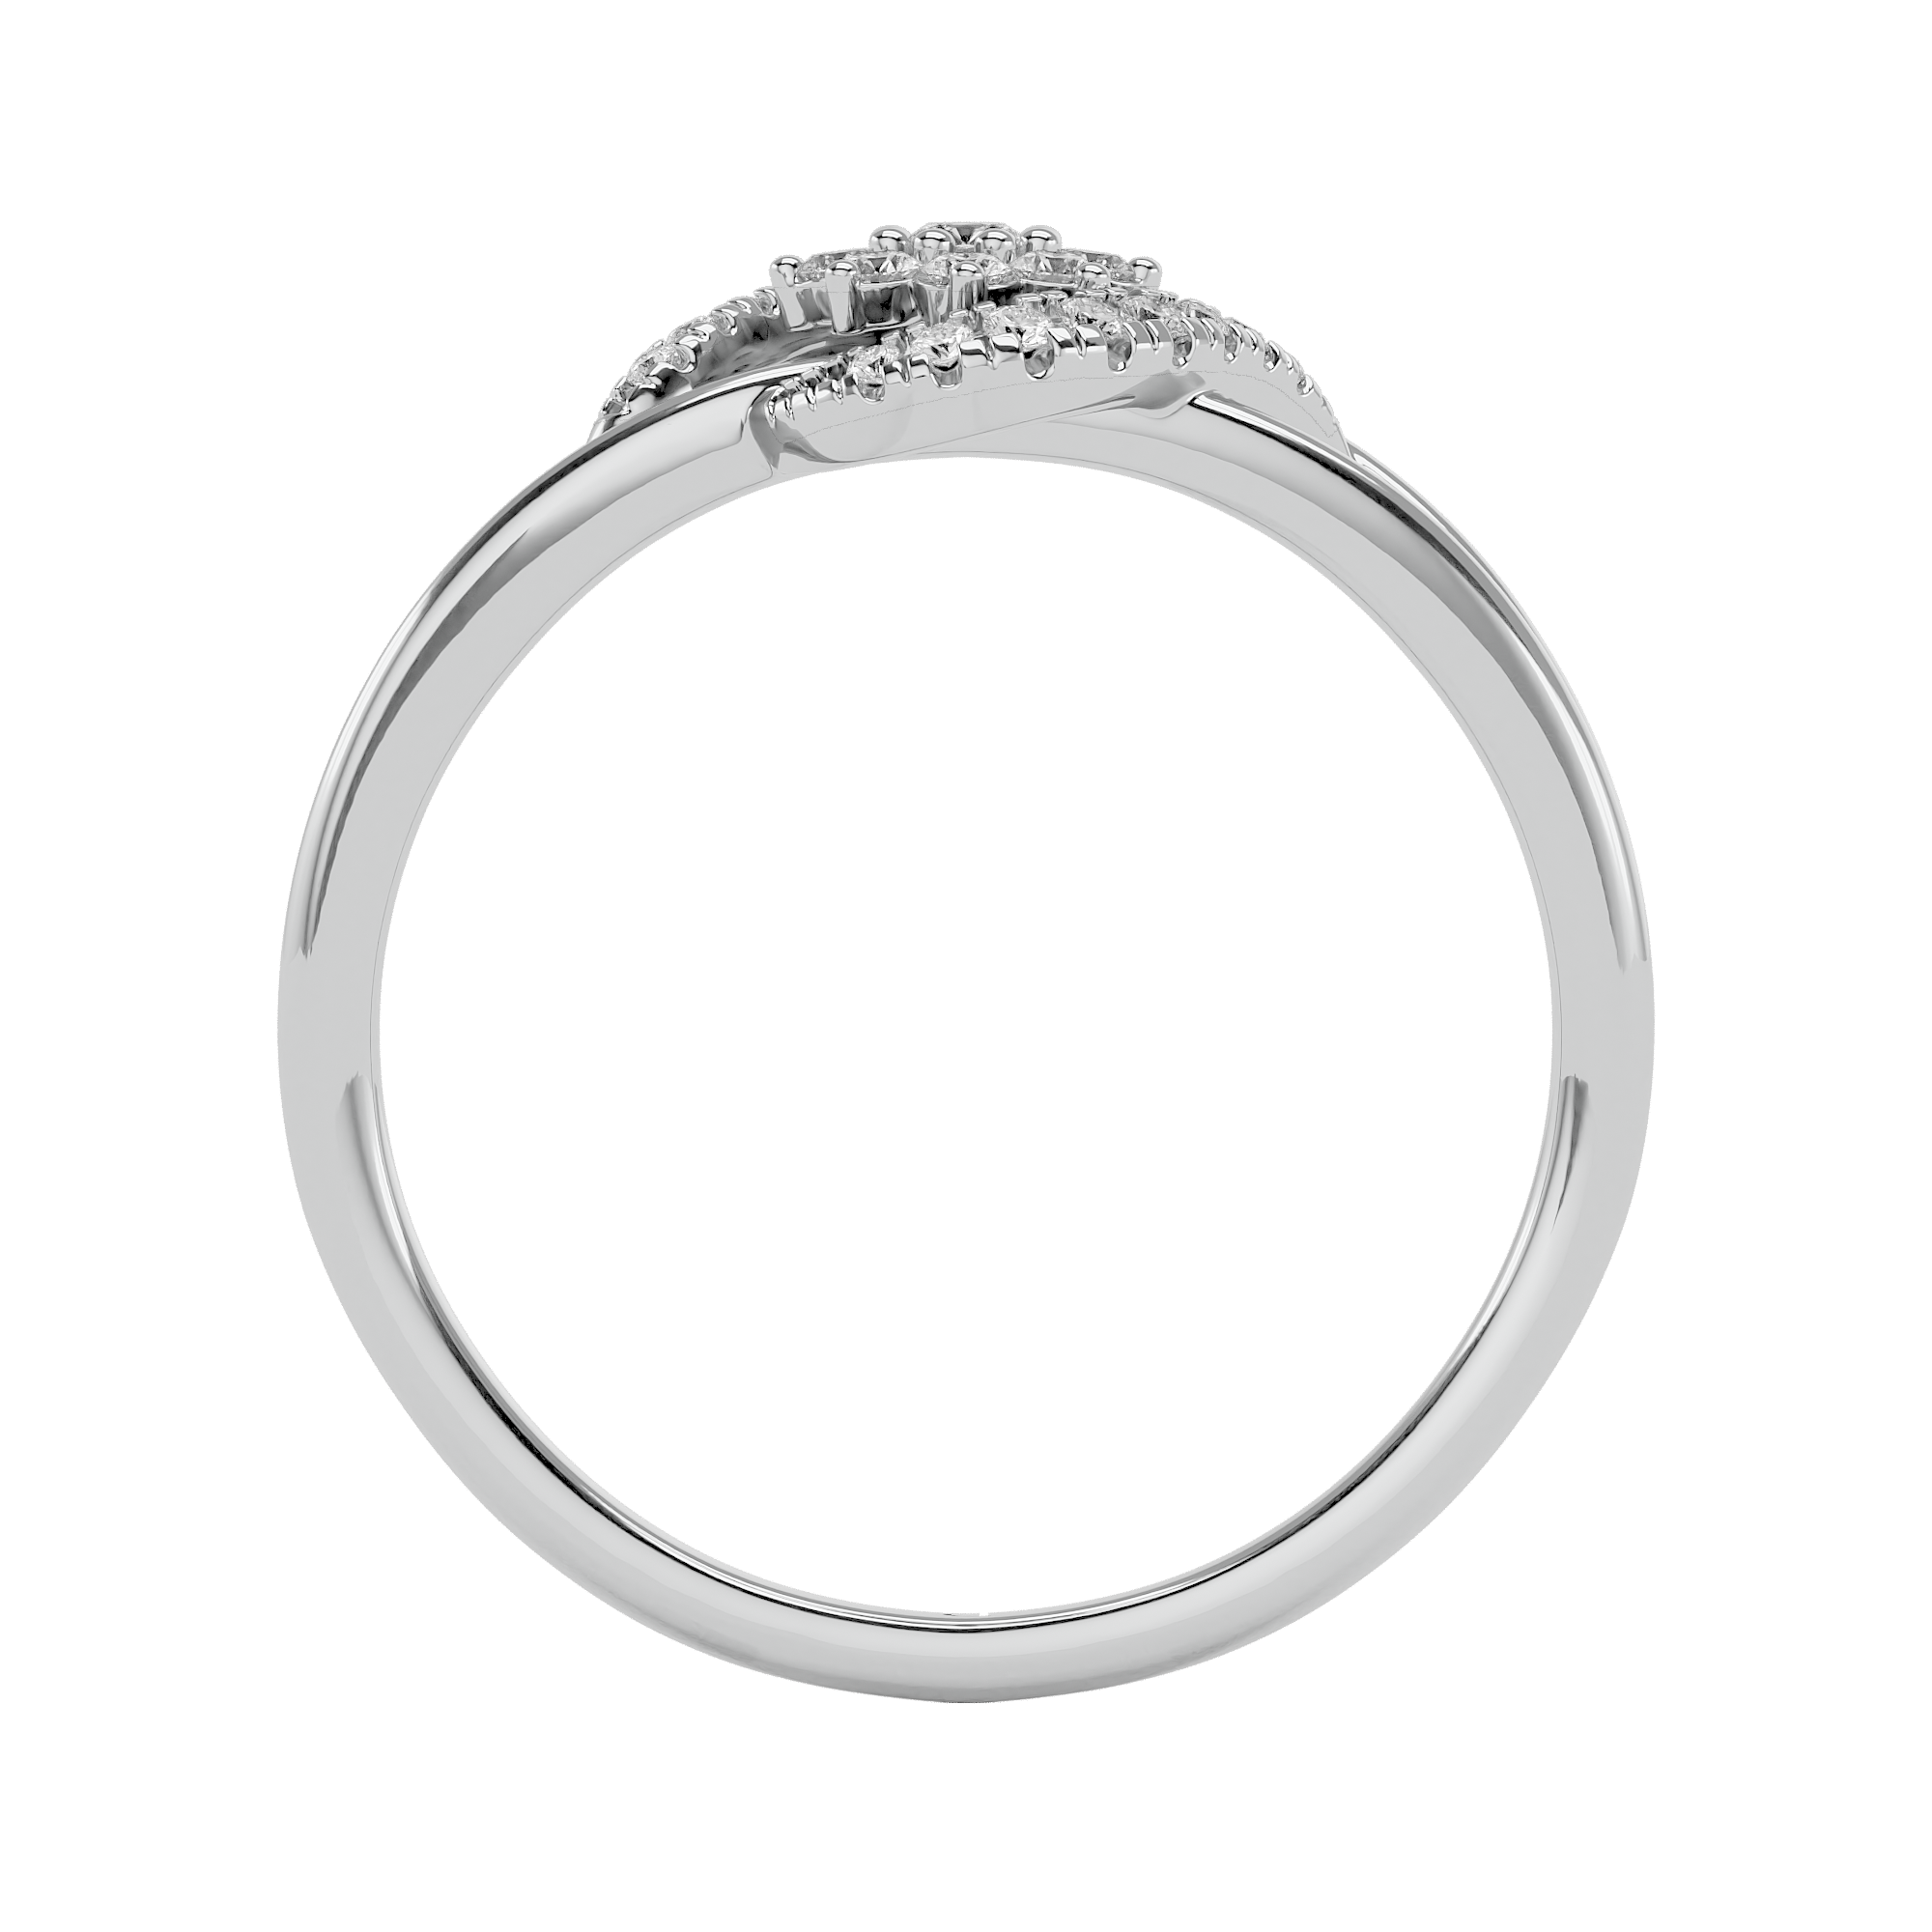 0.17 Carat Diamond Ring in 14Kt White Gold - Blu Diamonds